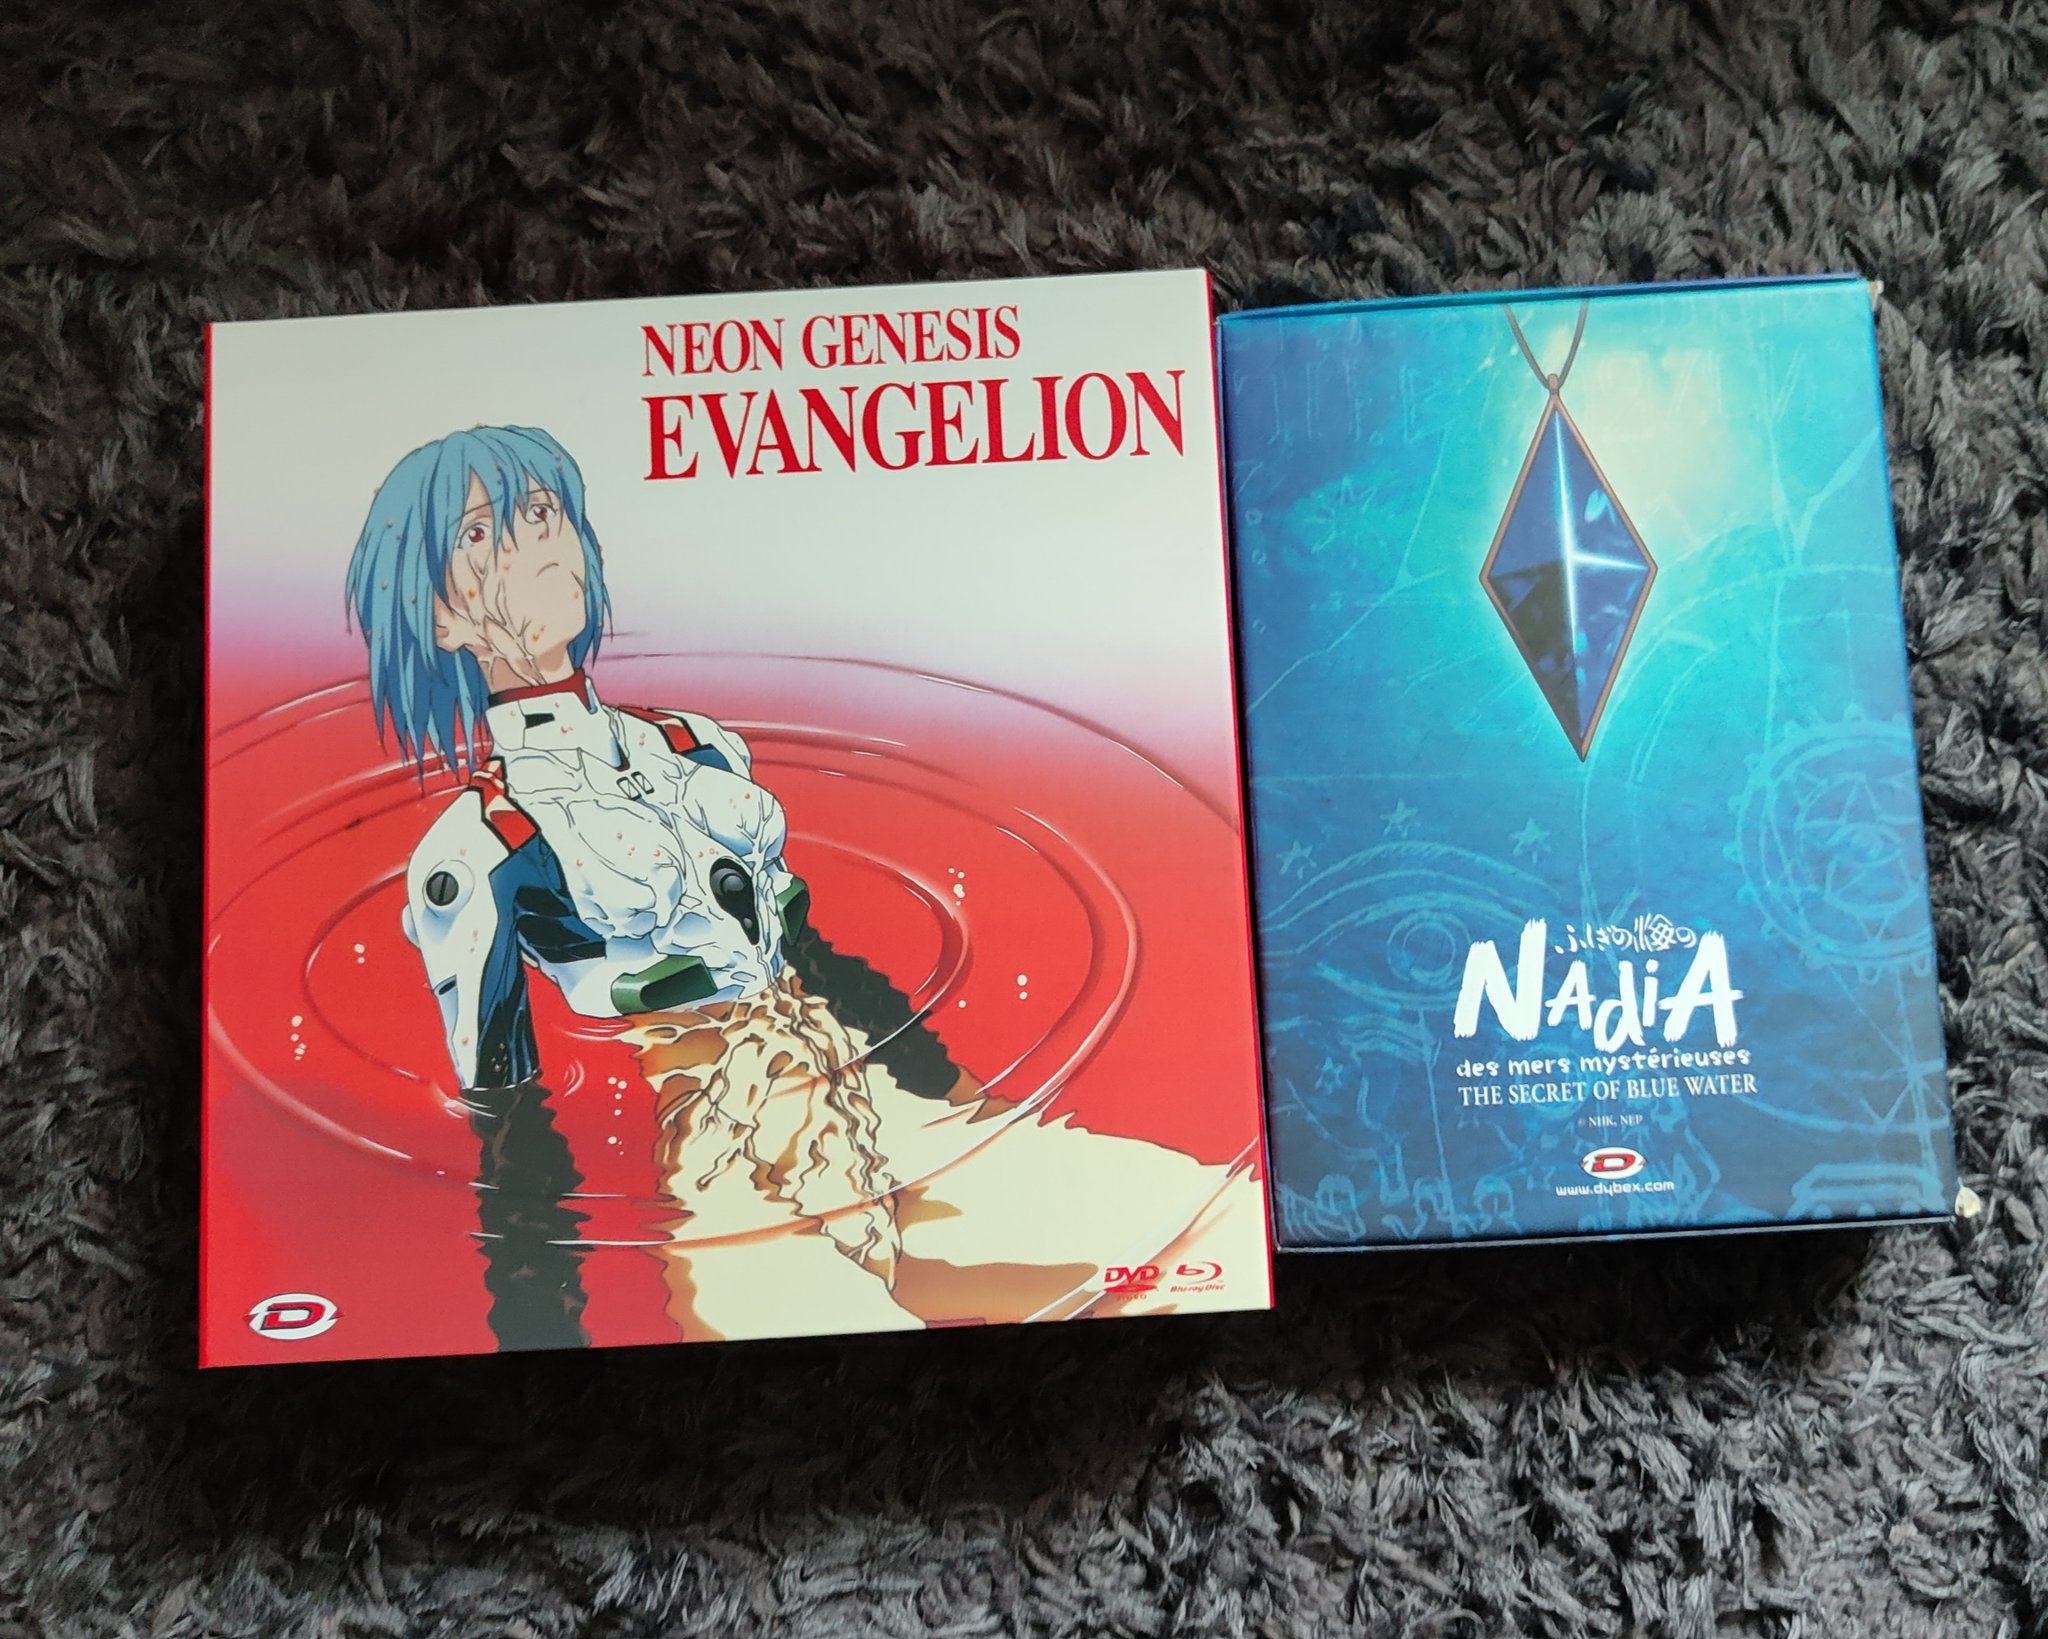 Evangelion arrive en coffret collector Blu-ray/DVD chez Dybex, et